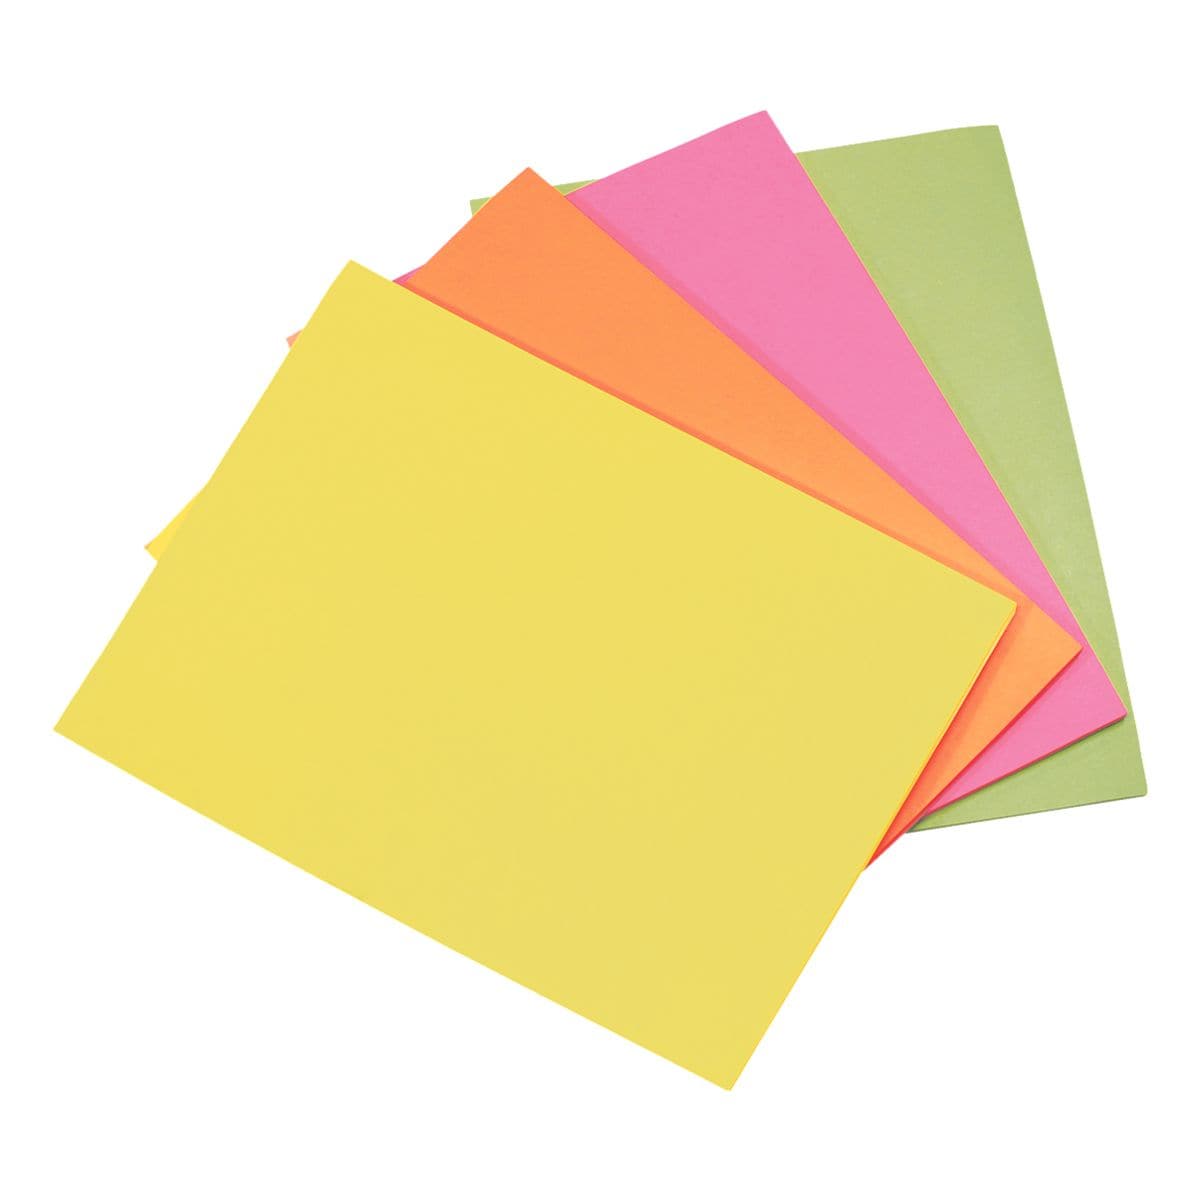 inFO Haftnotizblcke Kommunikationskarten 20 x 15 cm, 200 Blatt gesamt, farbig sortiert